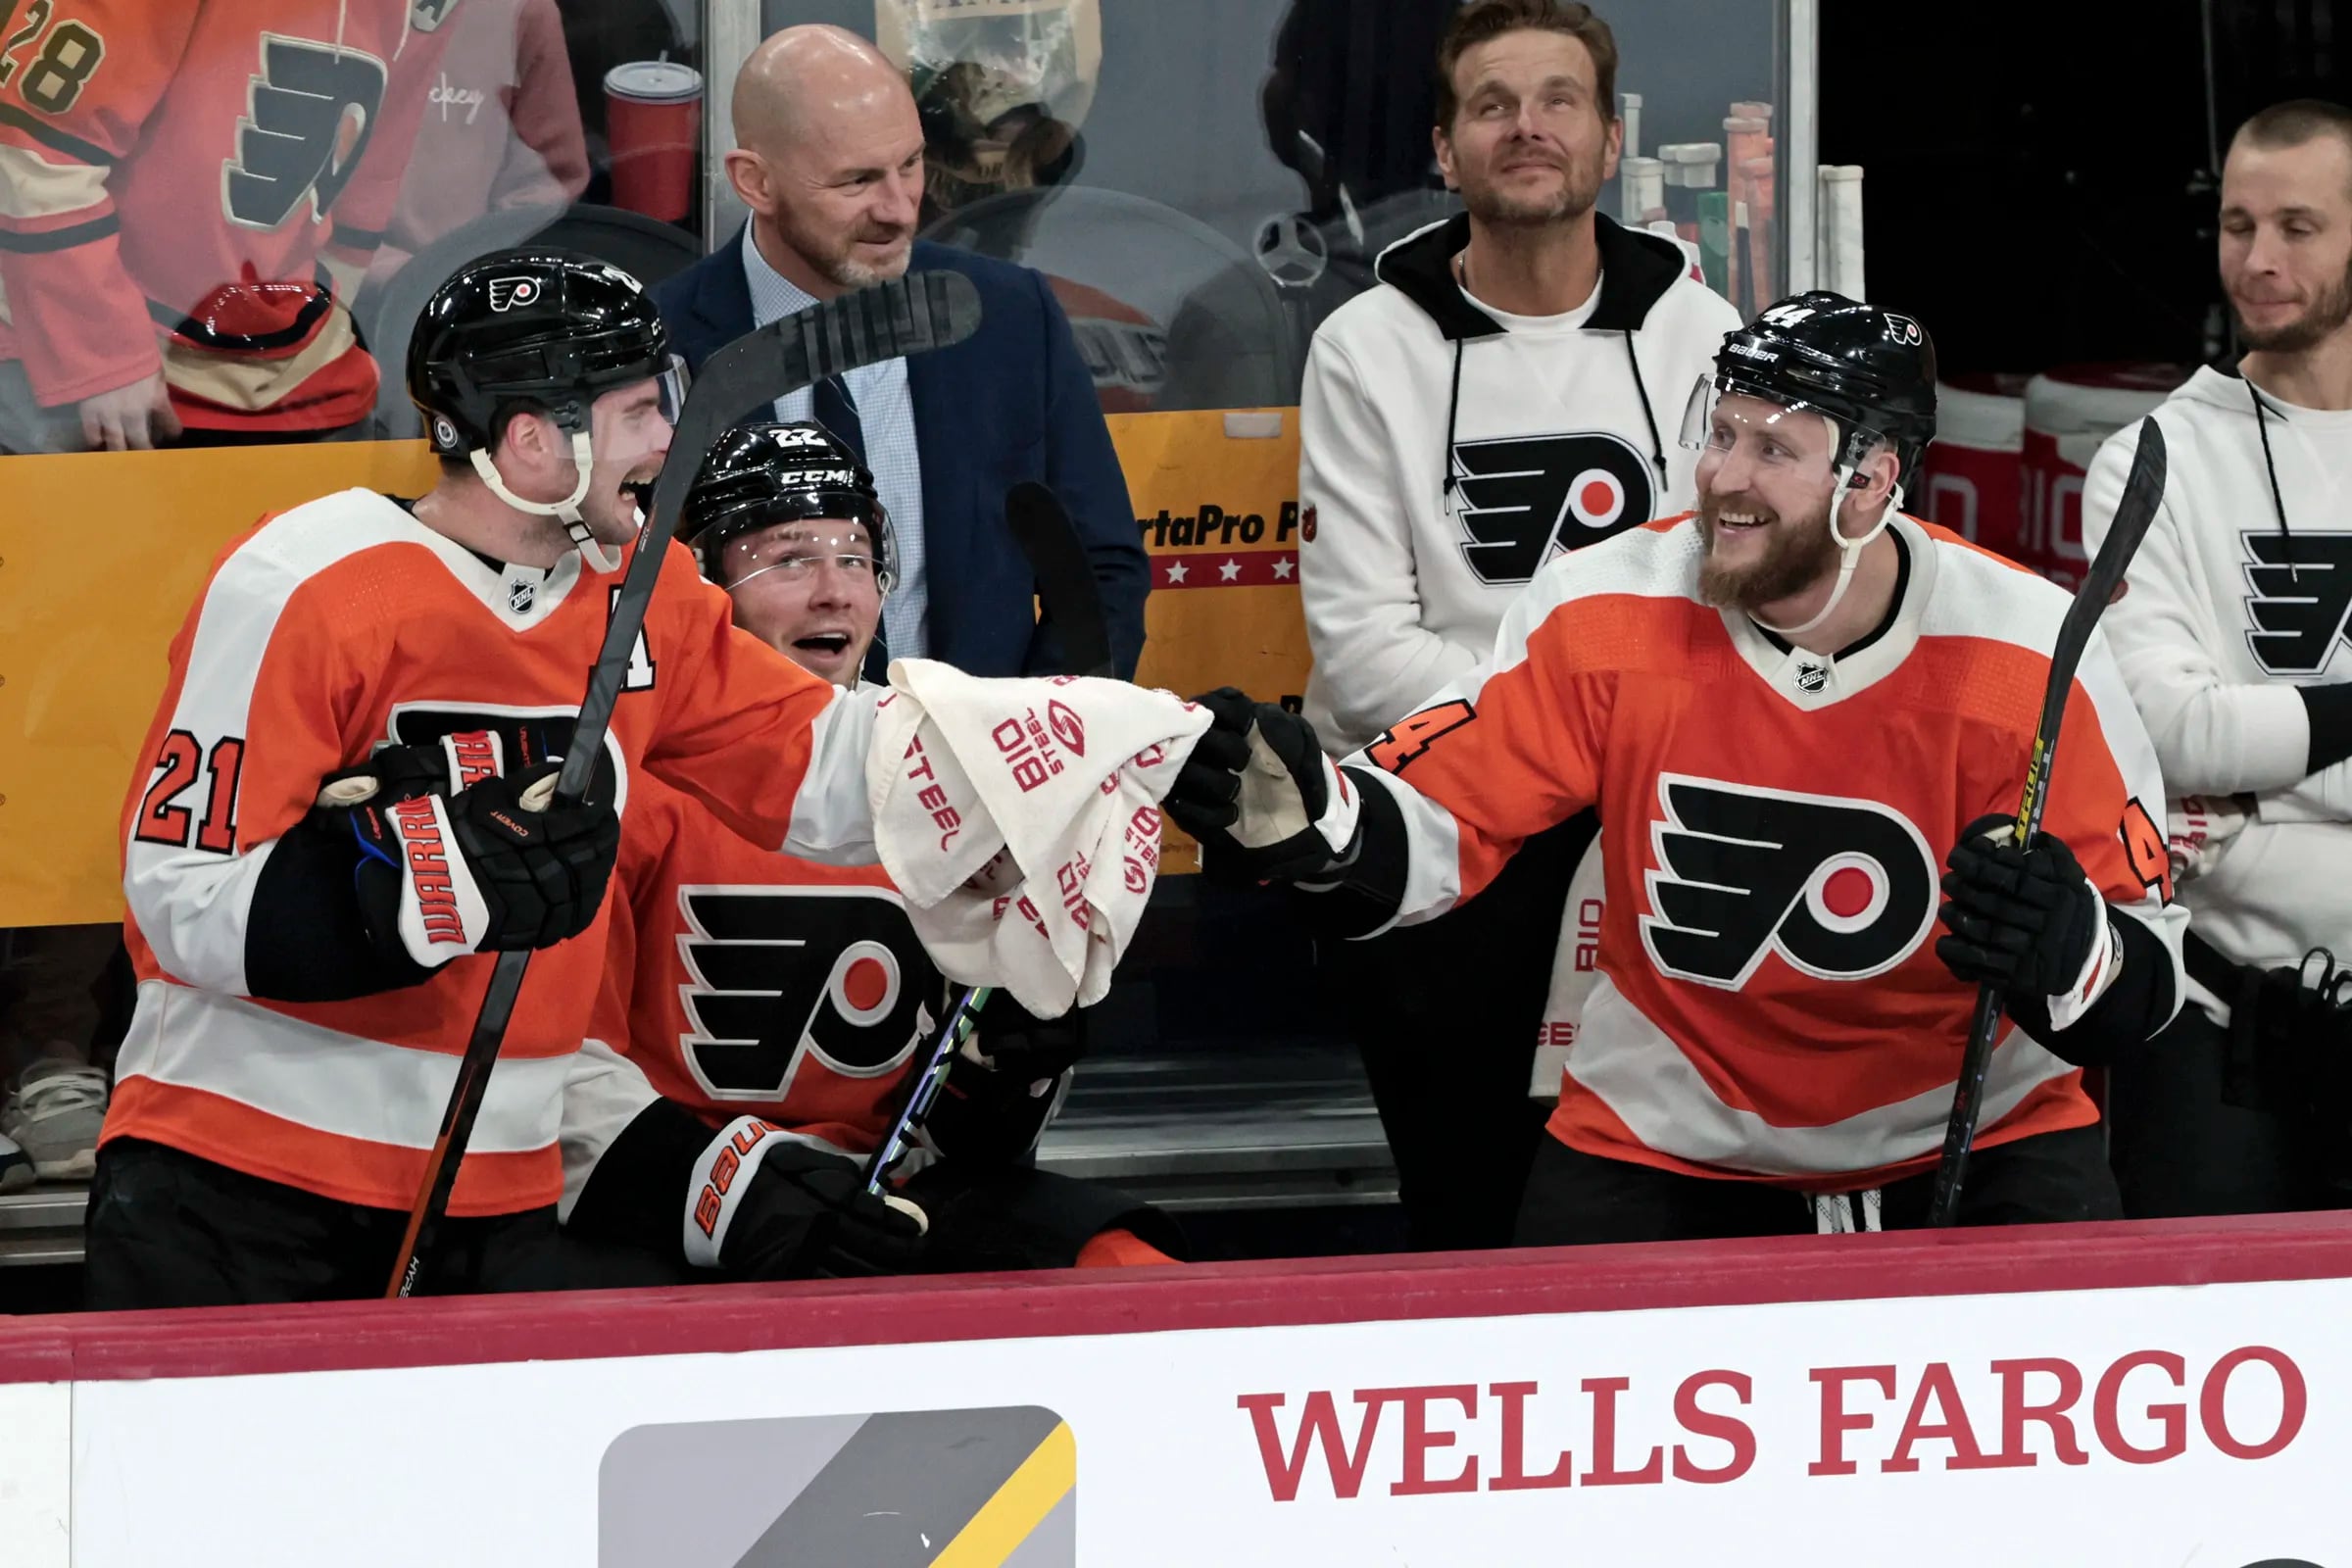 Philadelphia Flyers' Brendan Lemieux in action during an NHL